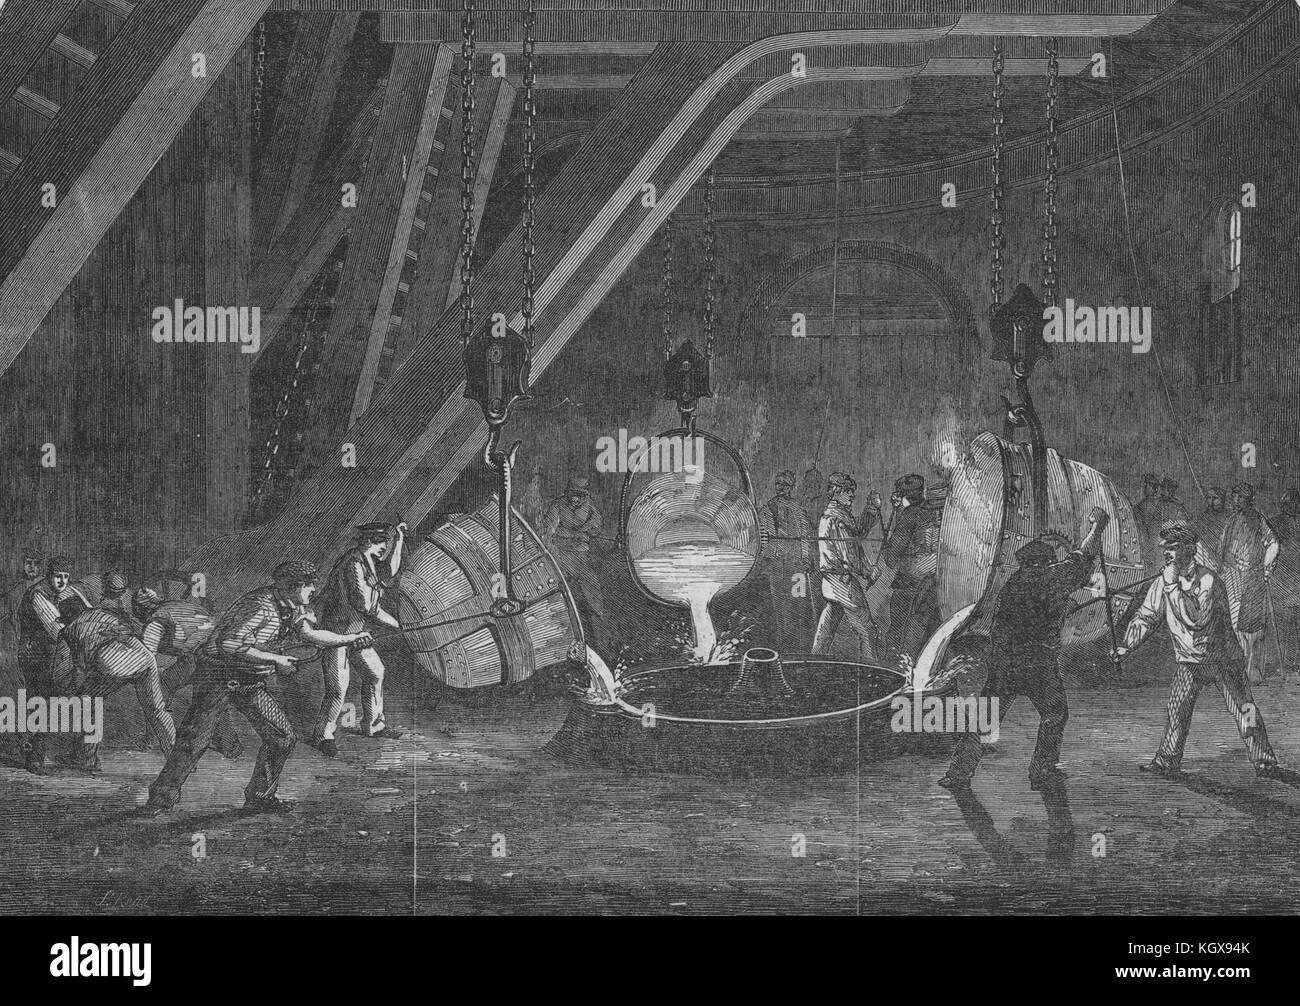 Casting Britannia Press cylinder, Bank Quay foundry, Warrington. Cheshire 1851. The Illustrated London News Stock Photo